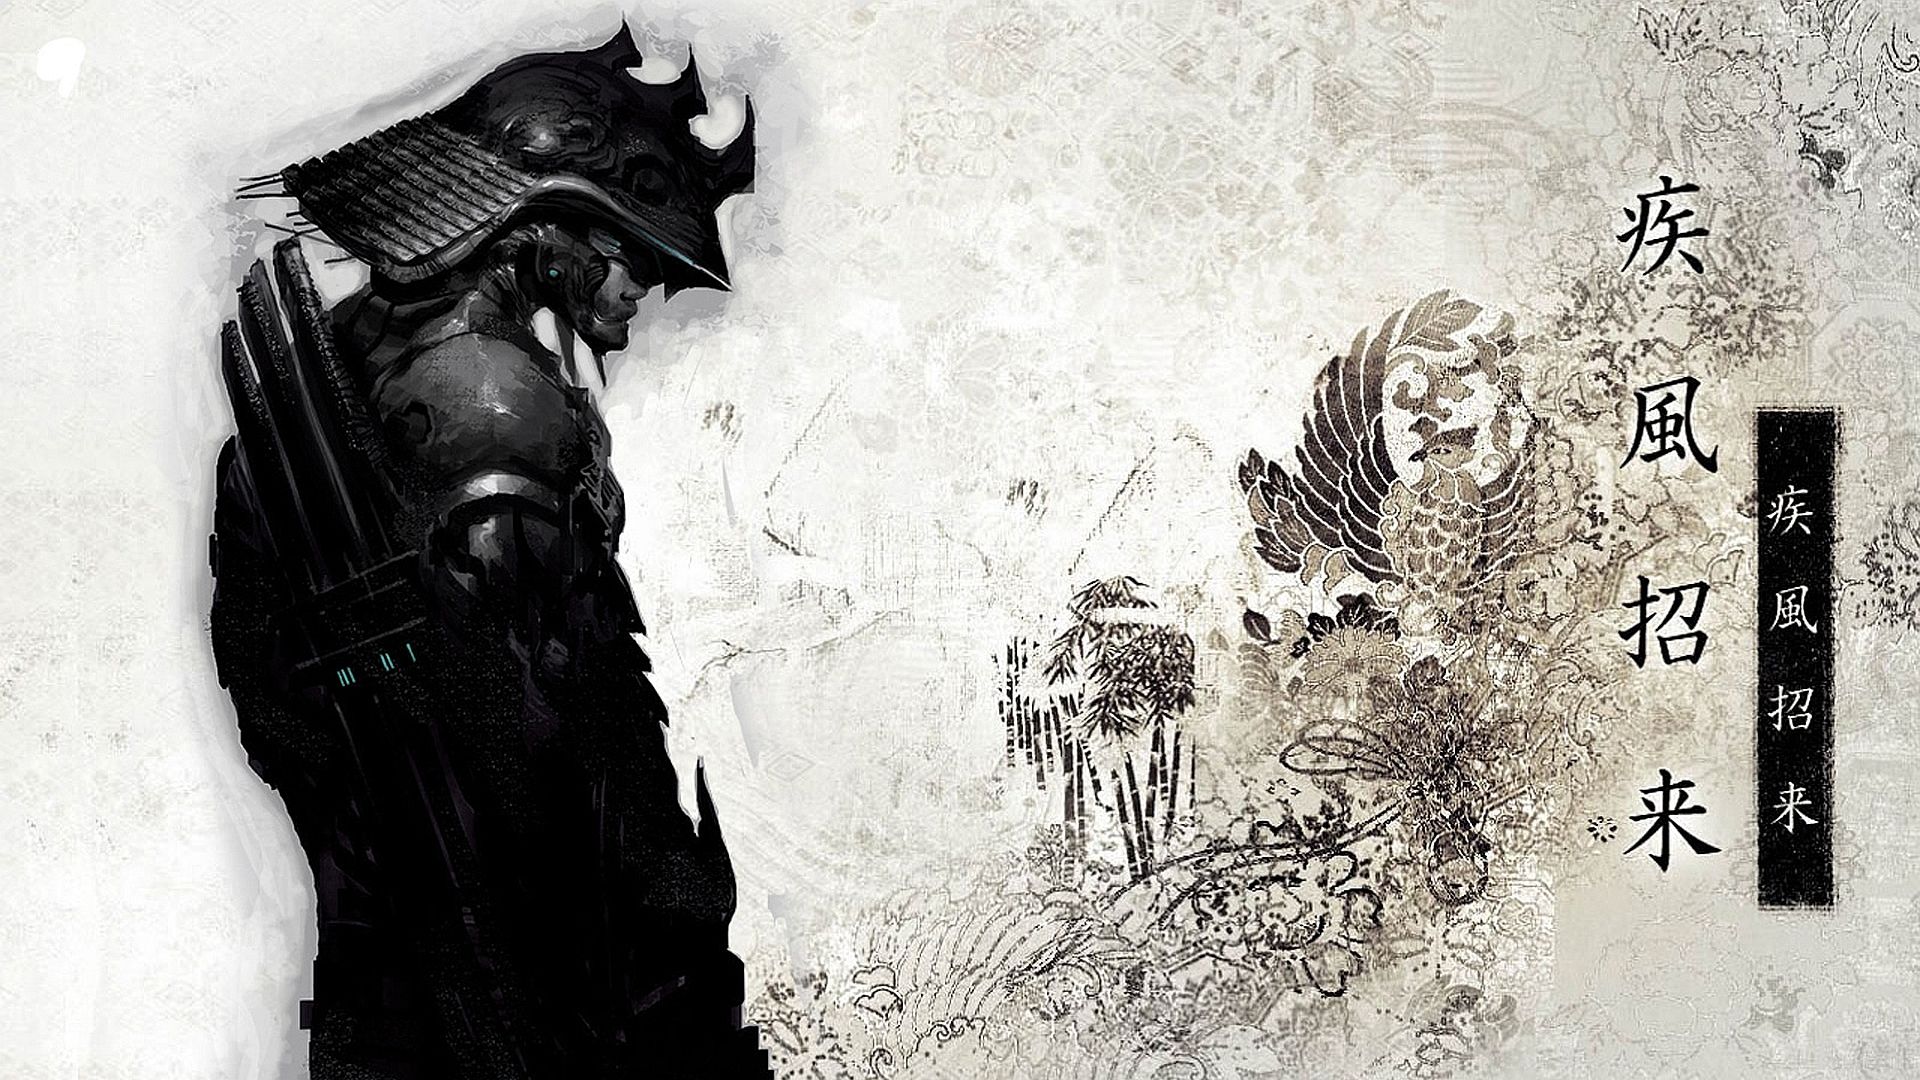 A poster with an asian man in armor - Samurai